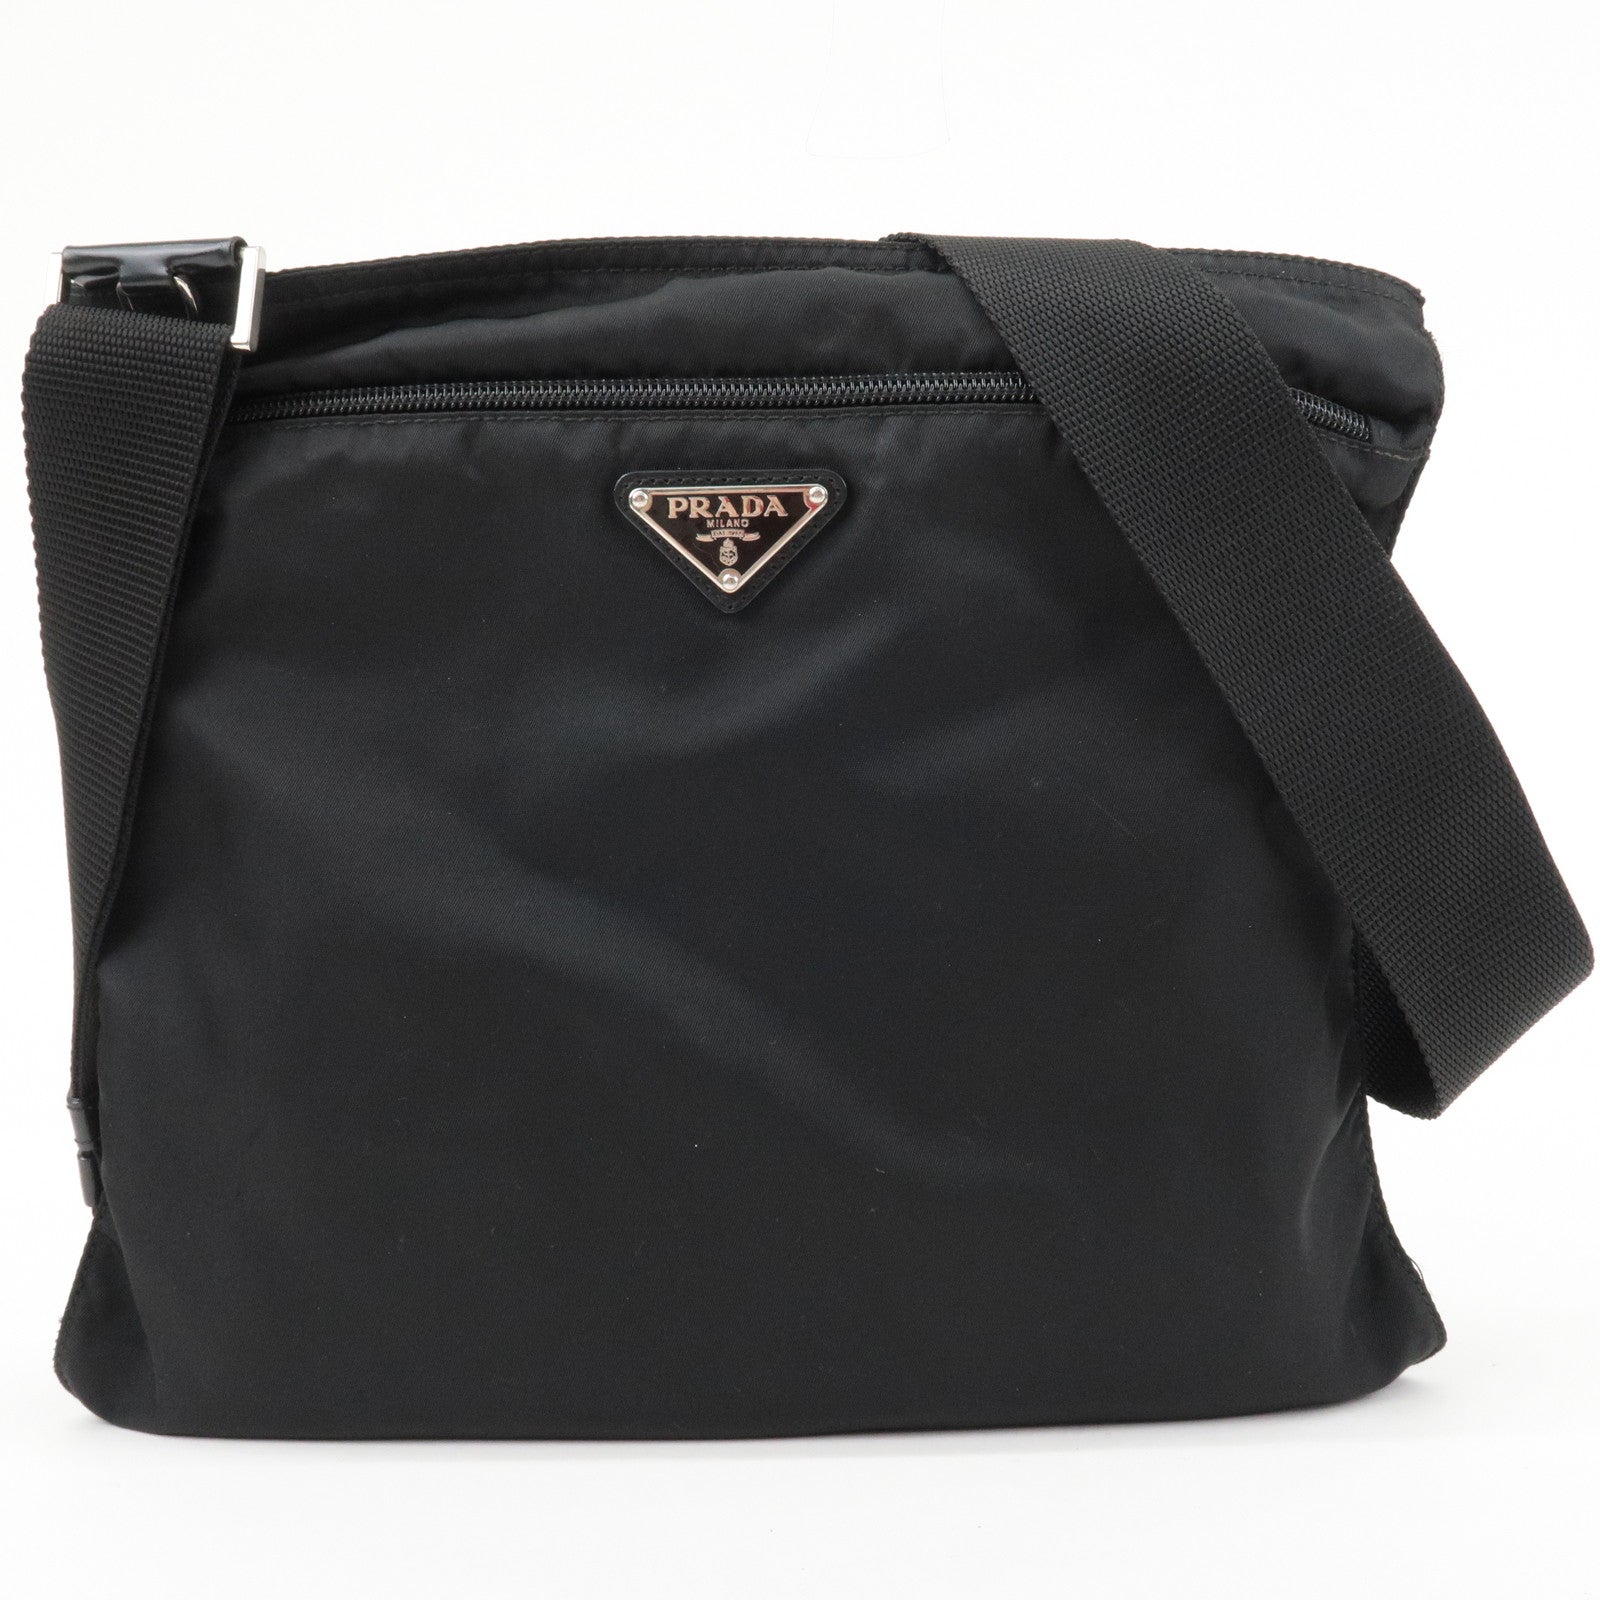 ❌SOLD❌ Prada Saffiano Leather Pattina shoulder/crossbody bag